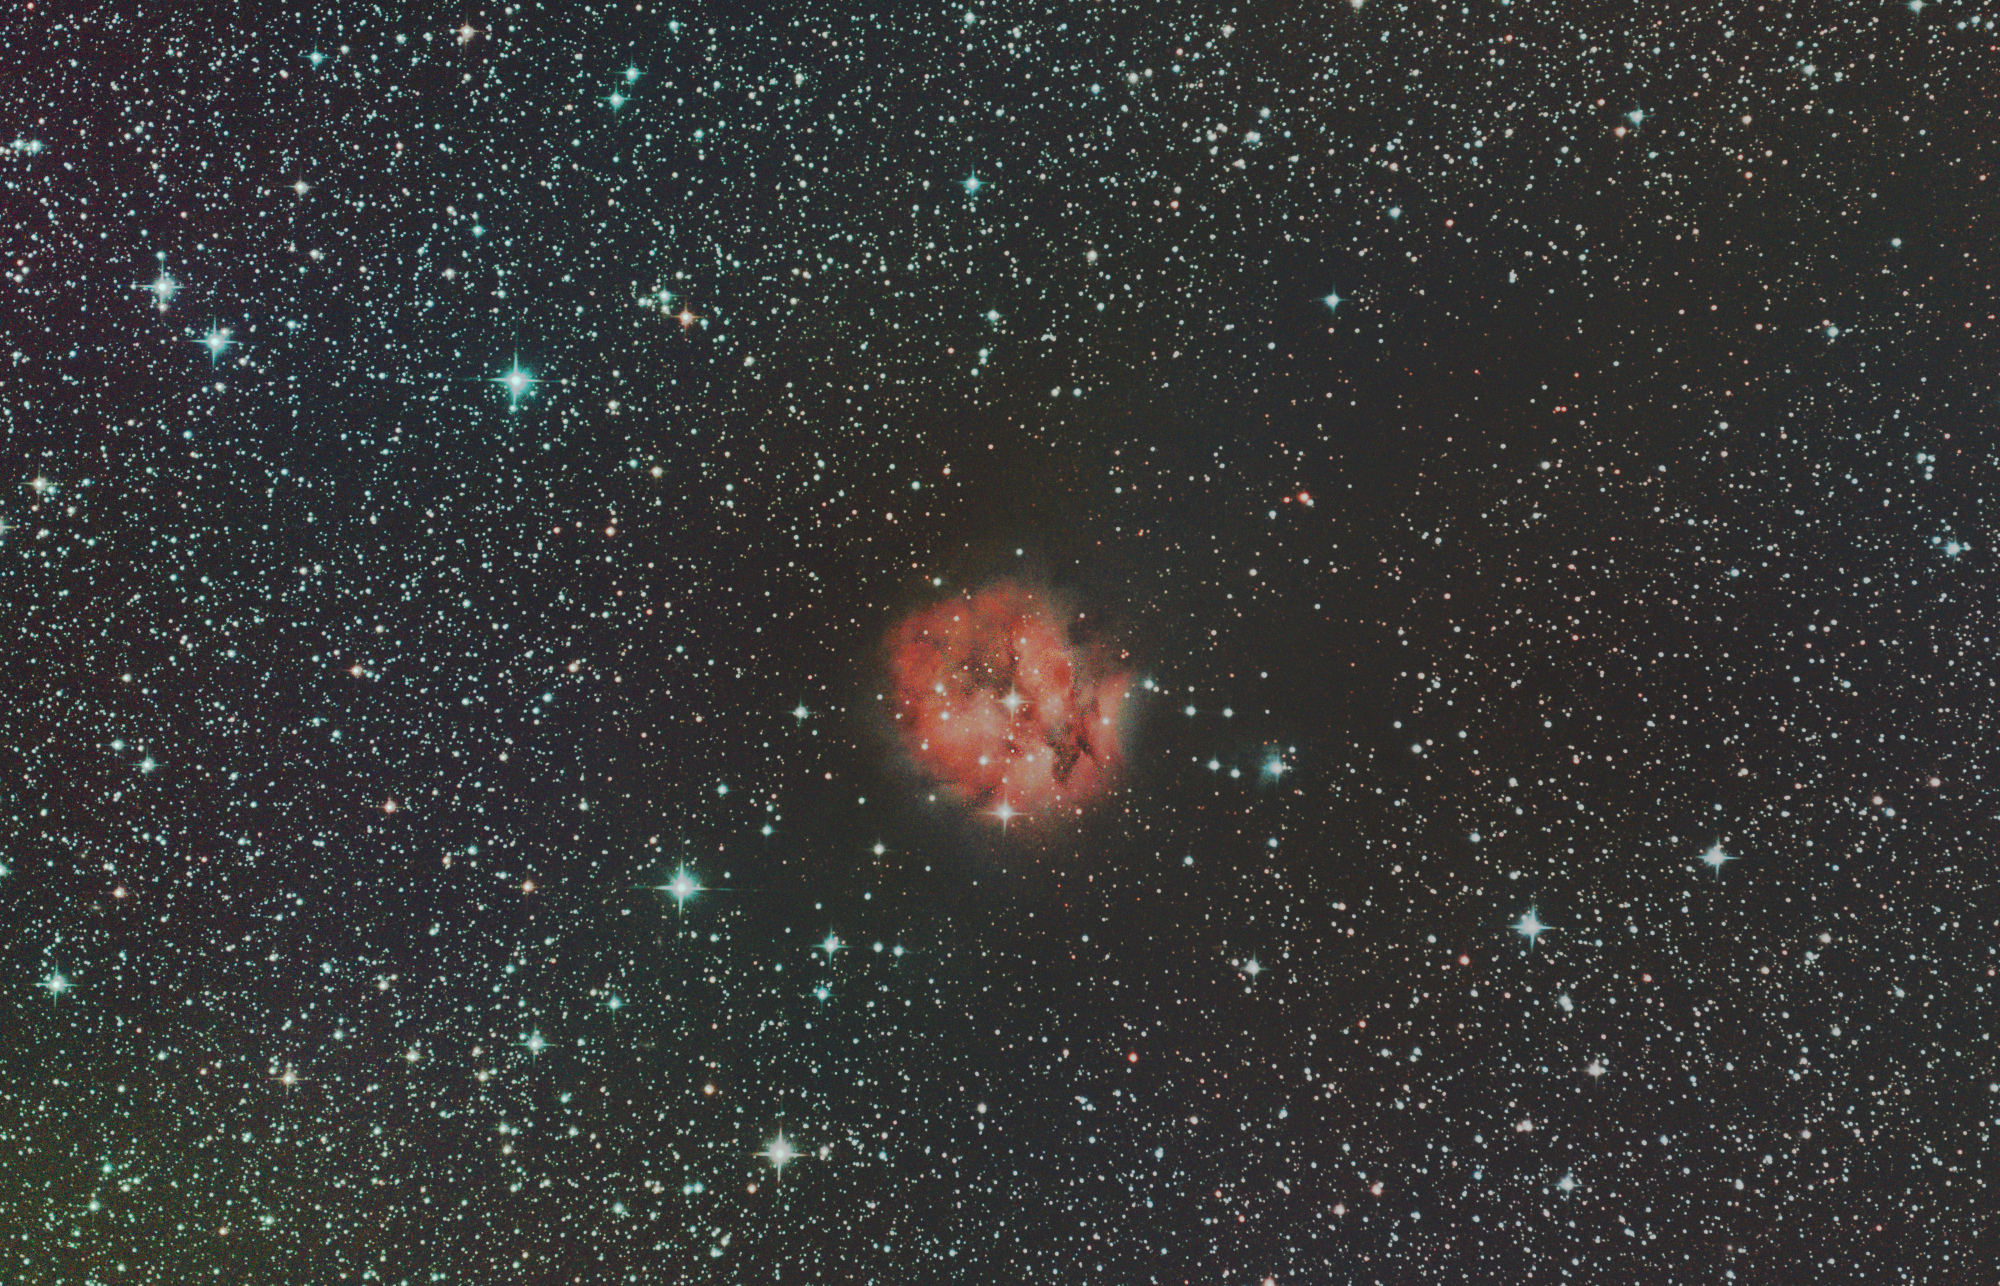 IC5146.jpg